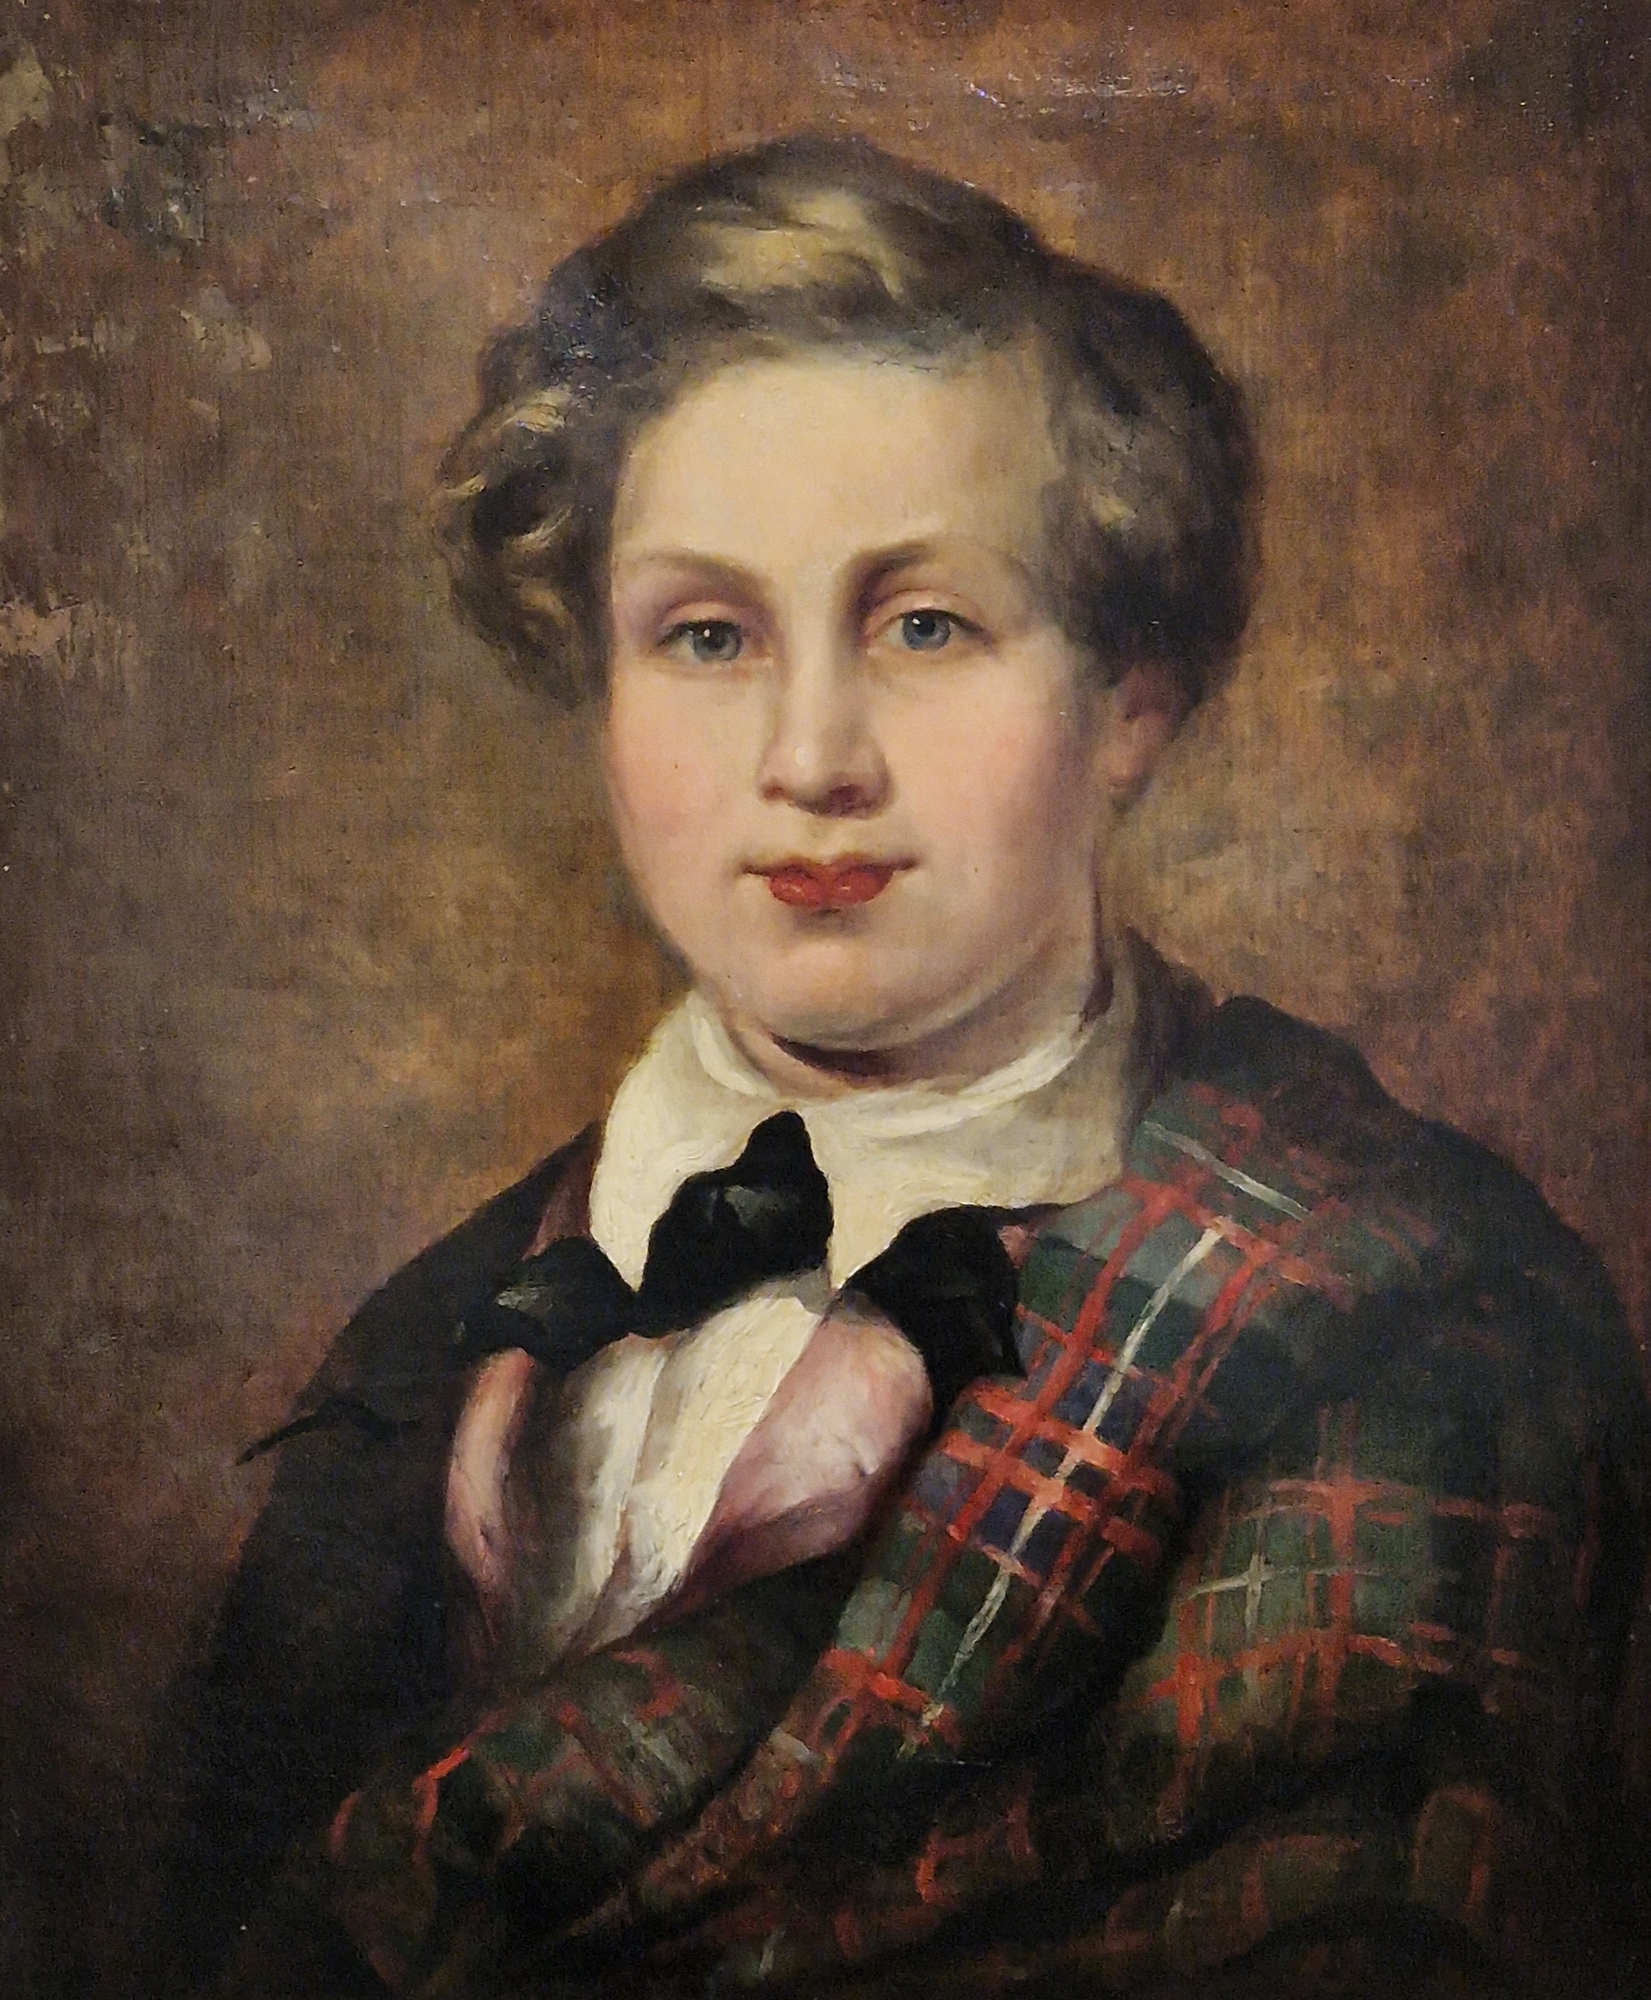 Reuben Sayers (1815-1888) Oil on canvas Portrait of Alexander McHaffie (cousin to Reuben Sayers by